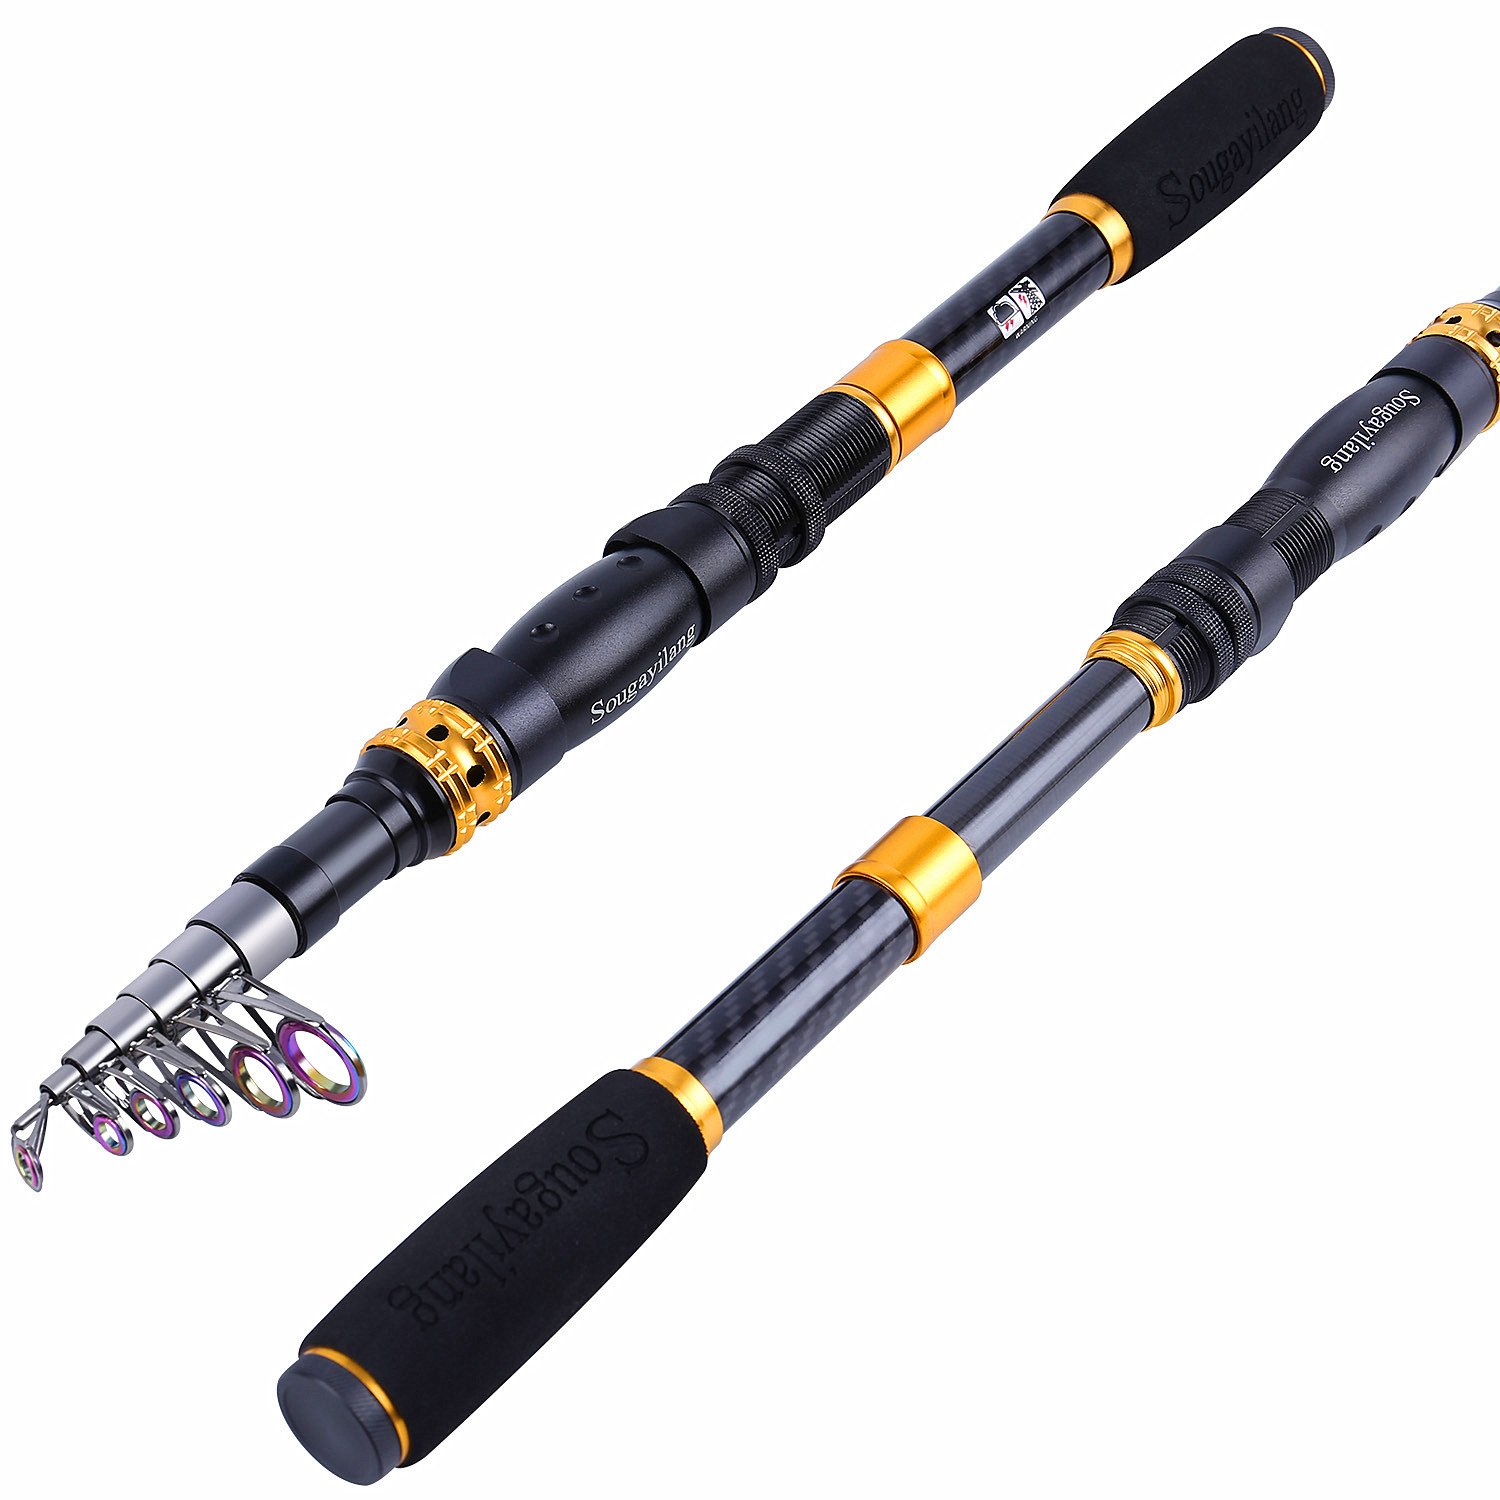 Sougayilang Telescopic Fishing Rod - 24 Ton Carbon Fiber Ultralight Fishing  Pole with CNC Reel Seat, Portable